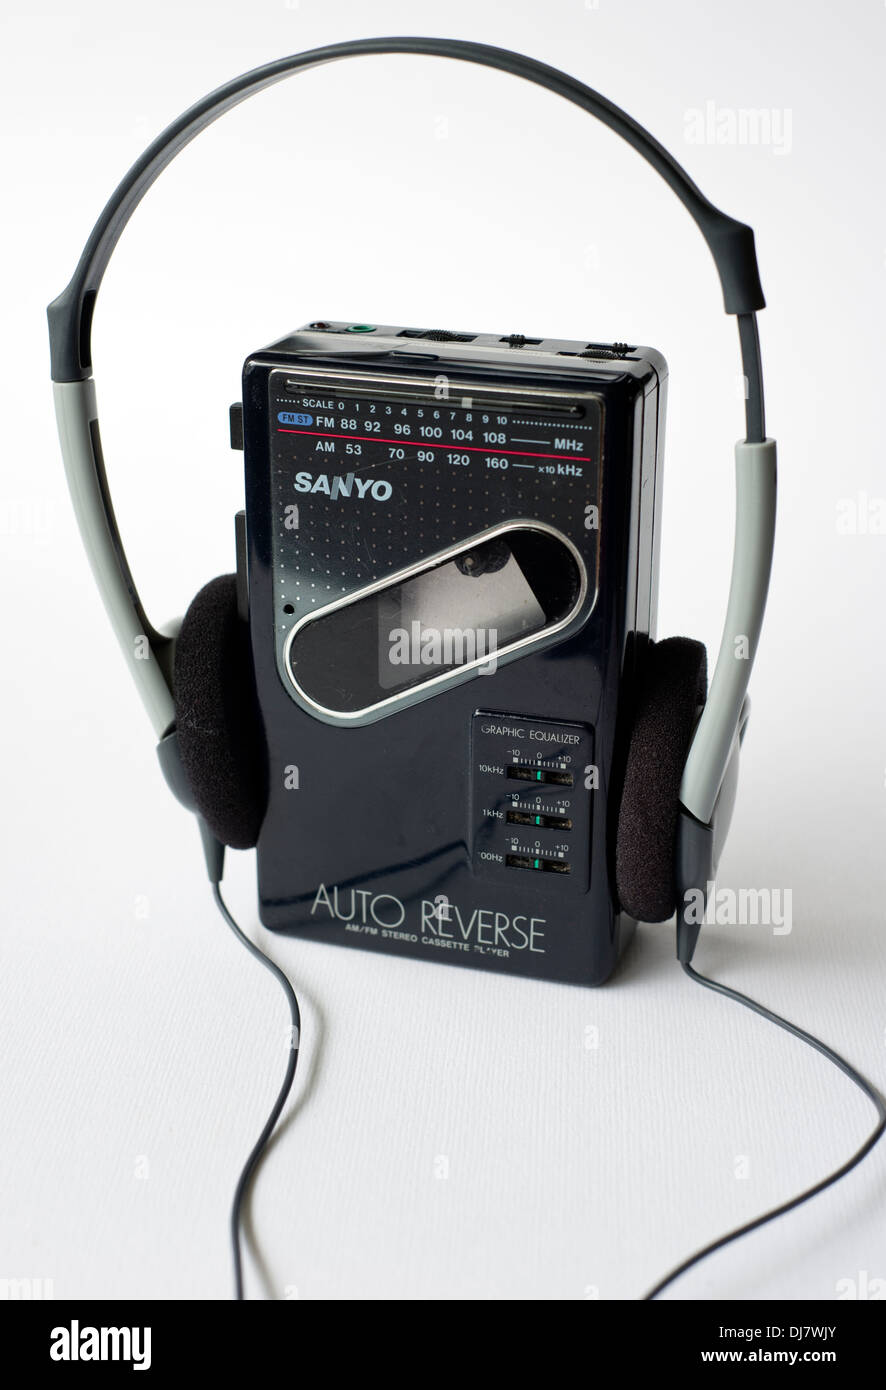 Sanyo Walkman Cassette Player